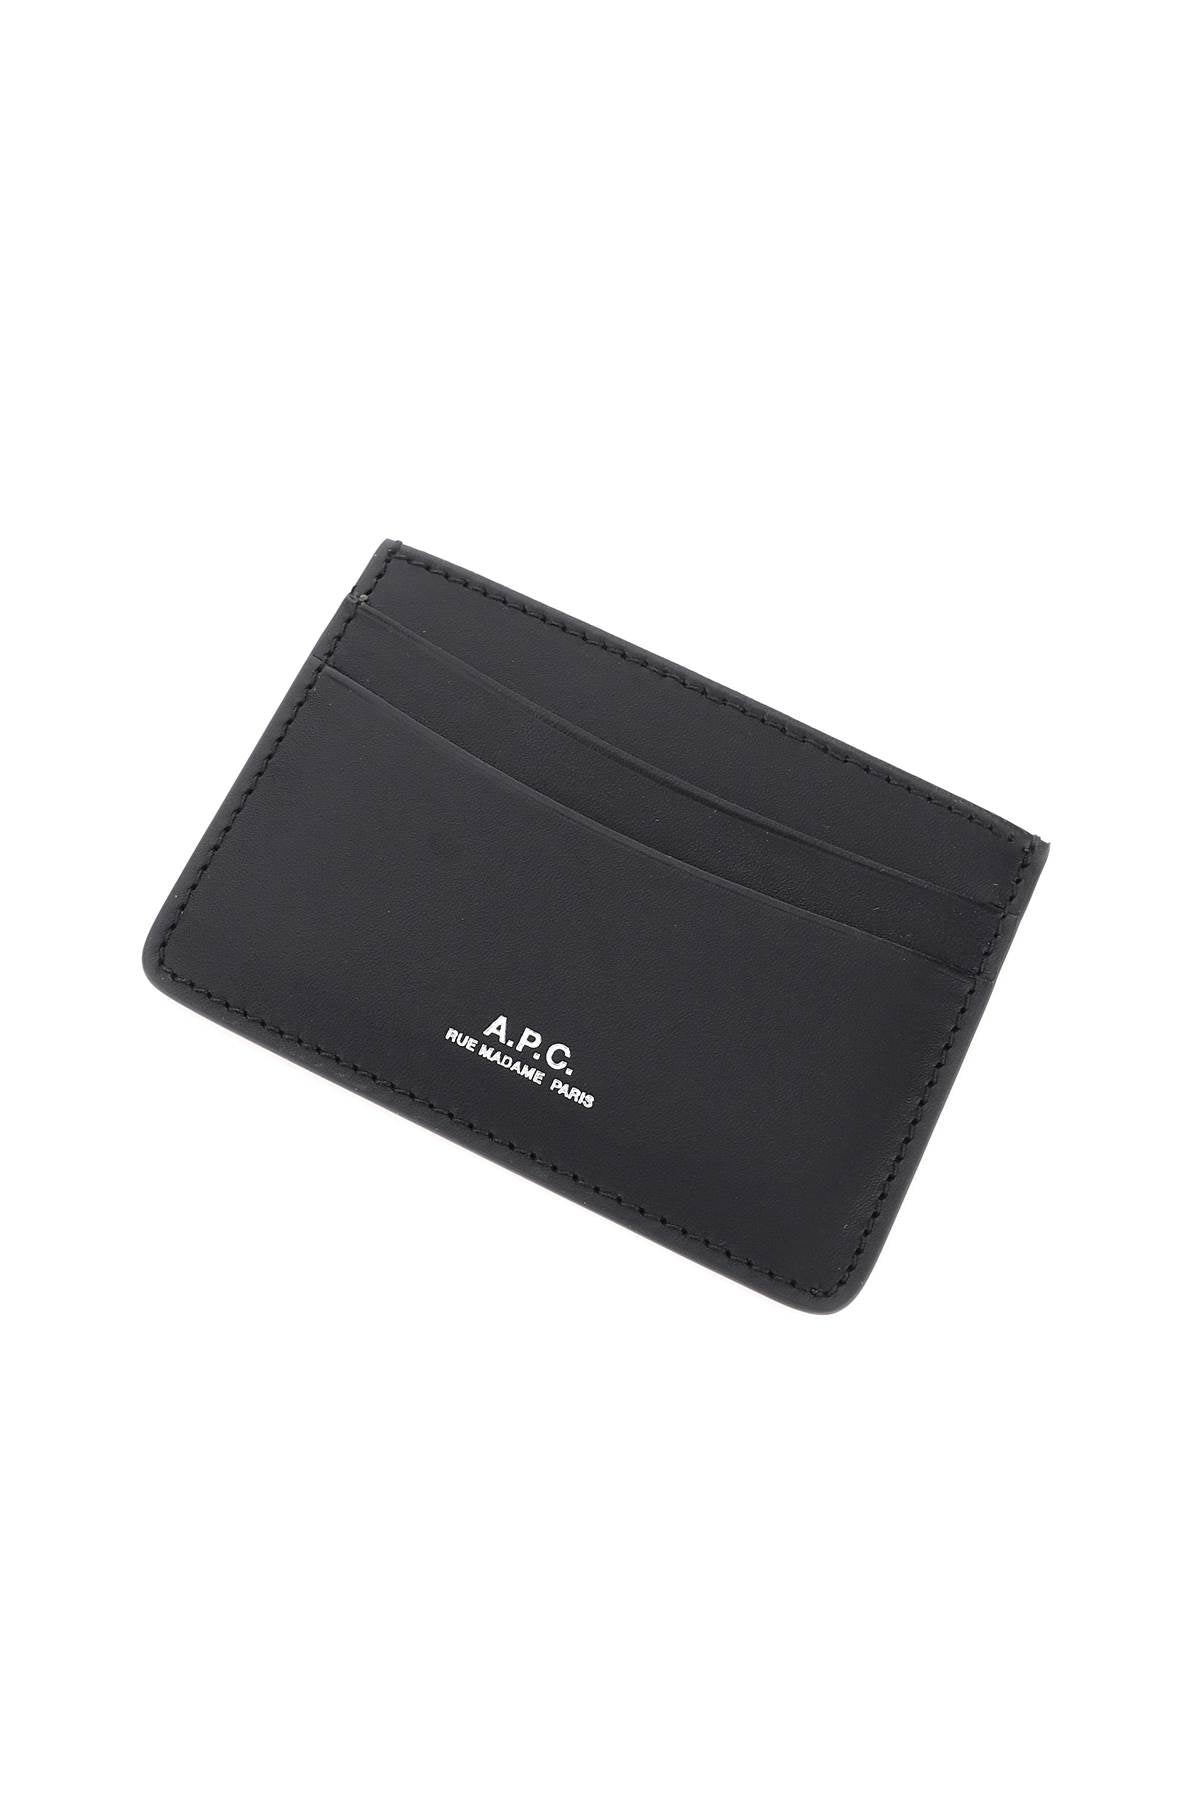 A.P.C. Leather Andre Cardholder   Black